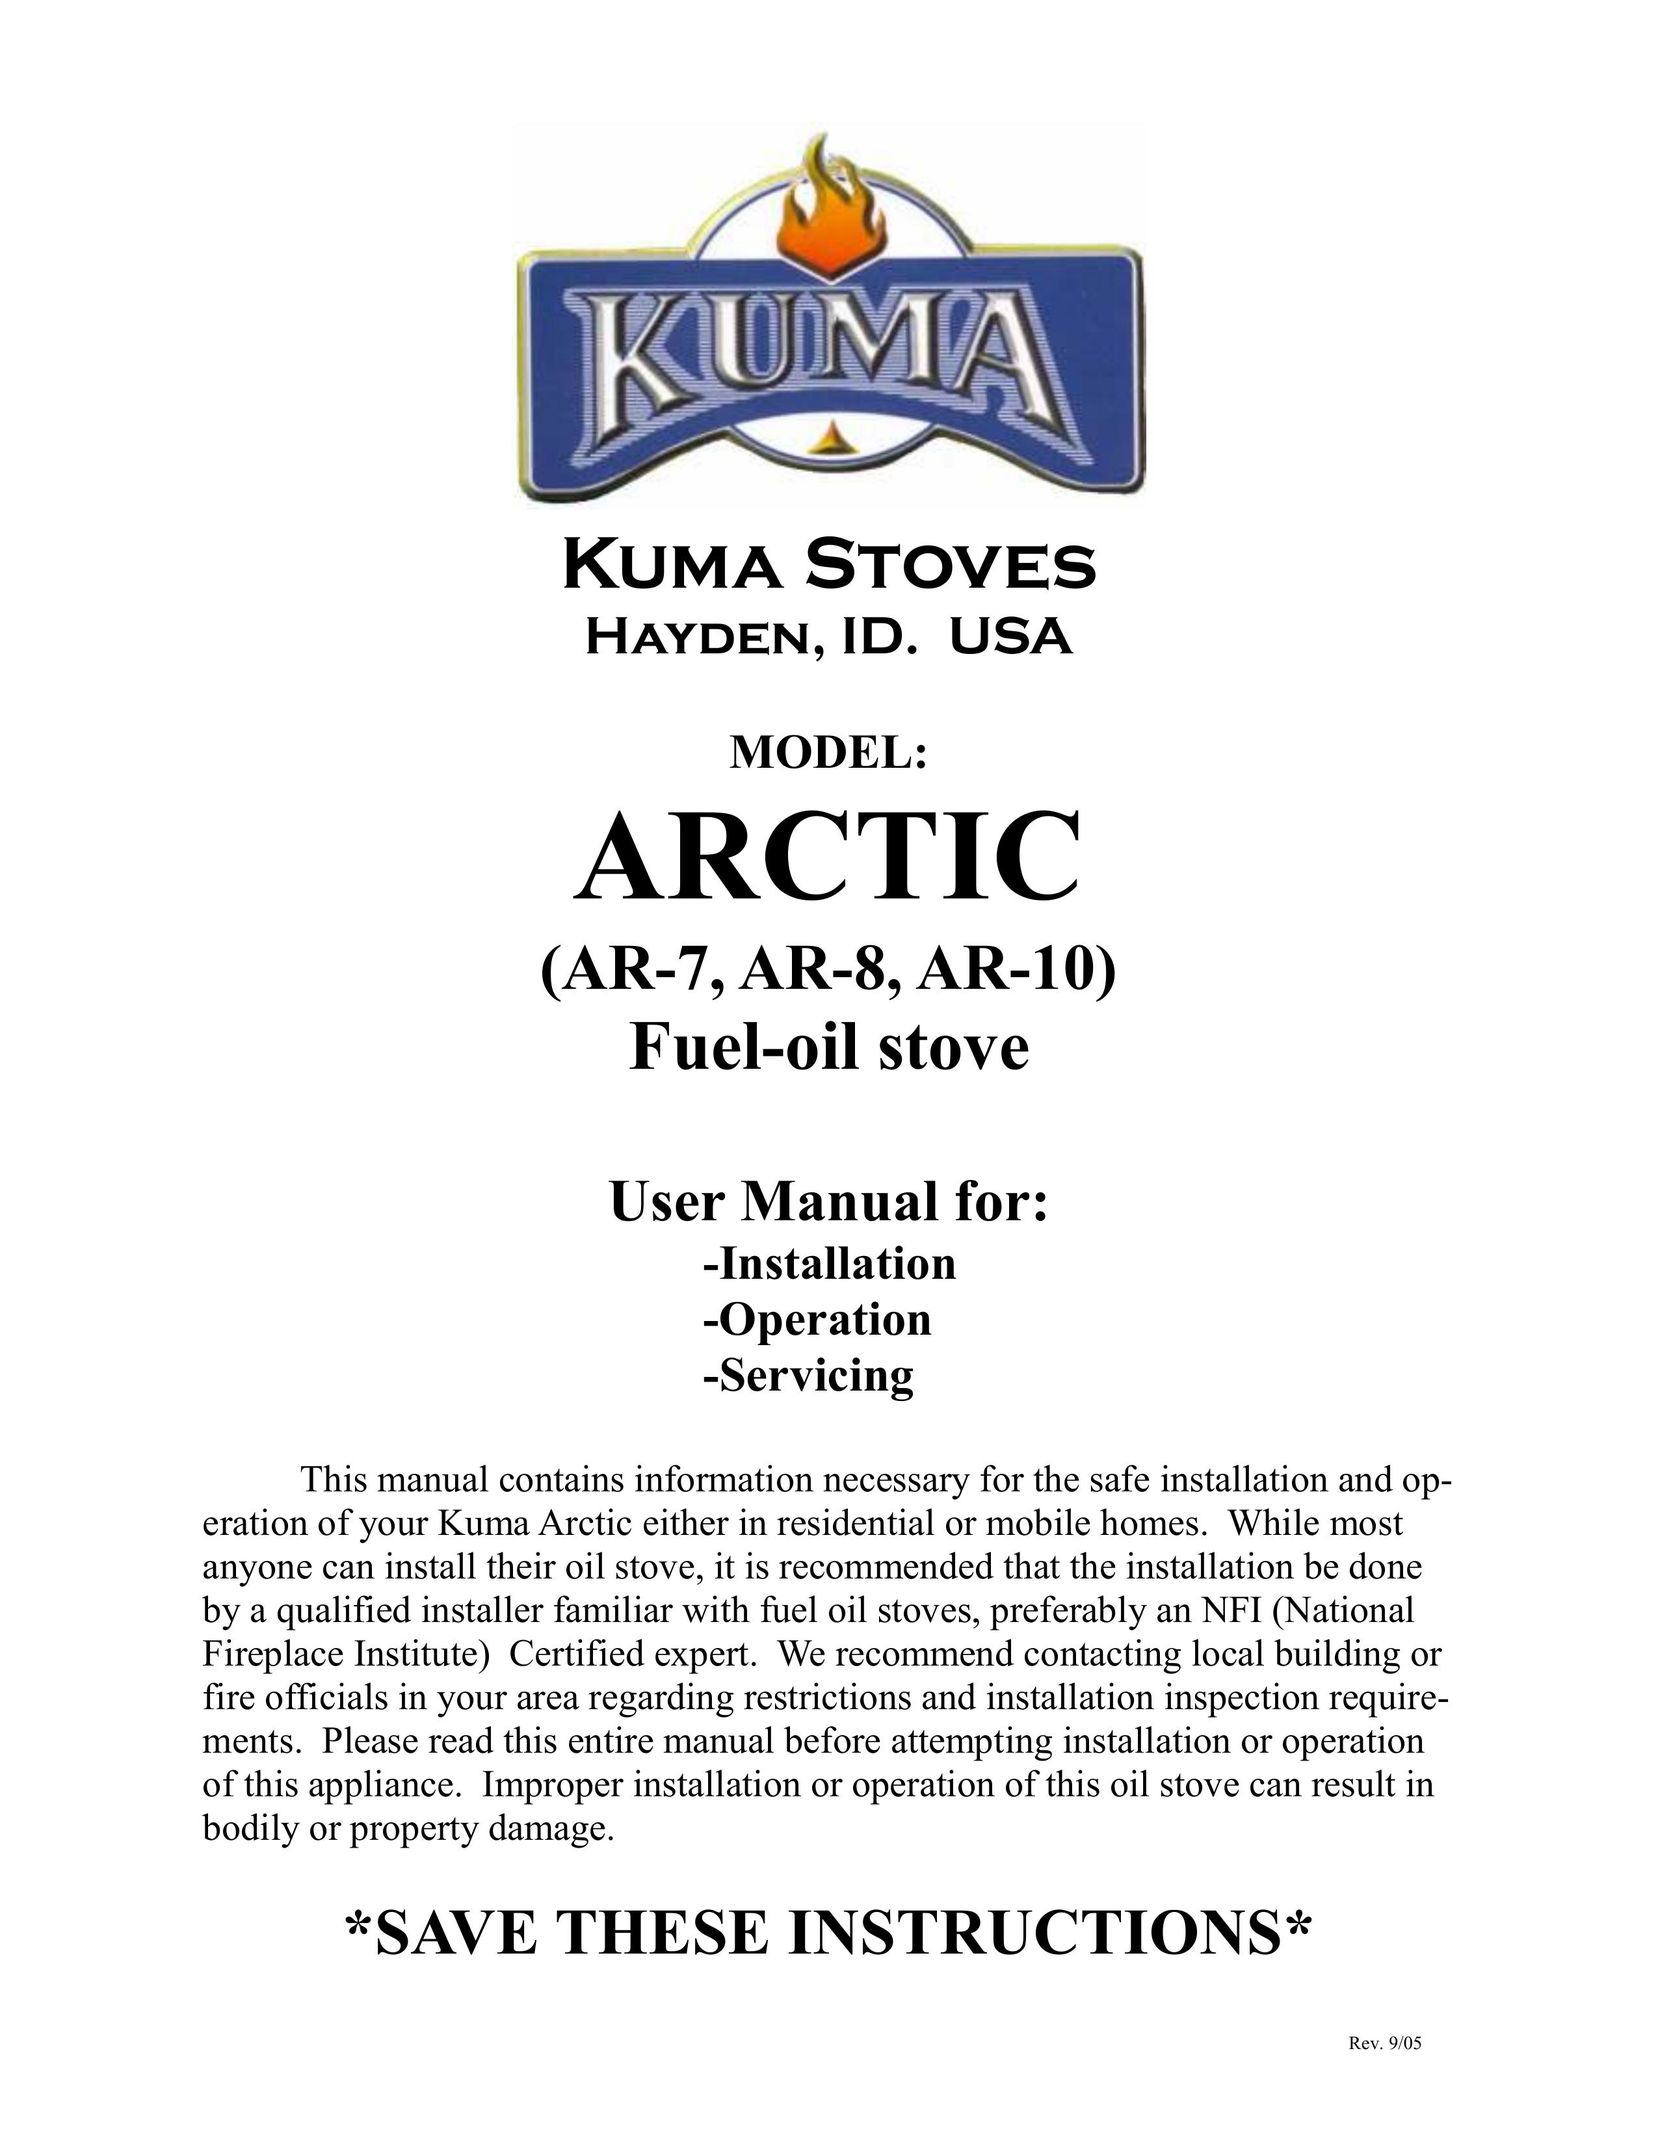 Kuma Stoves AR-10 Stove User Manual